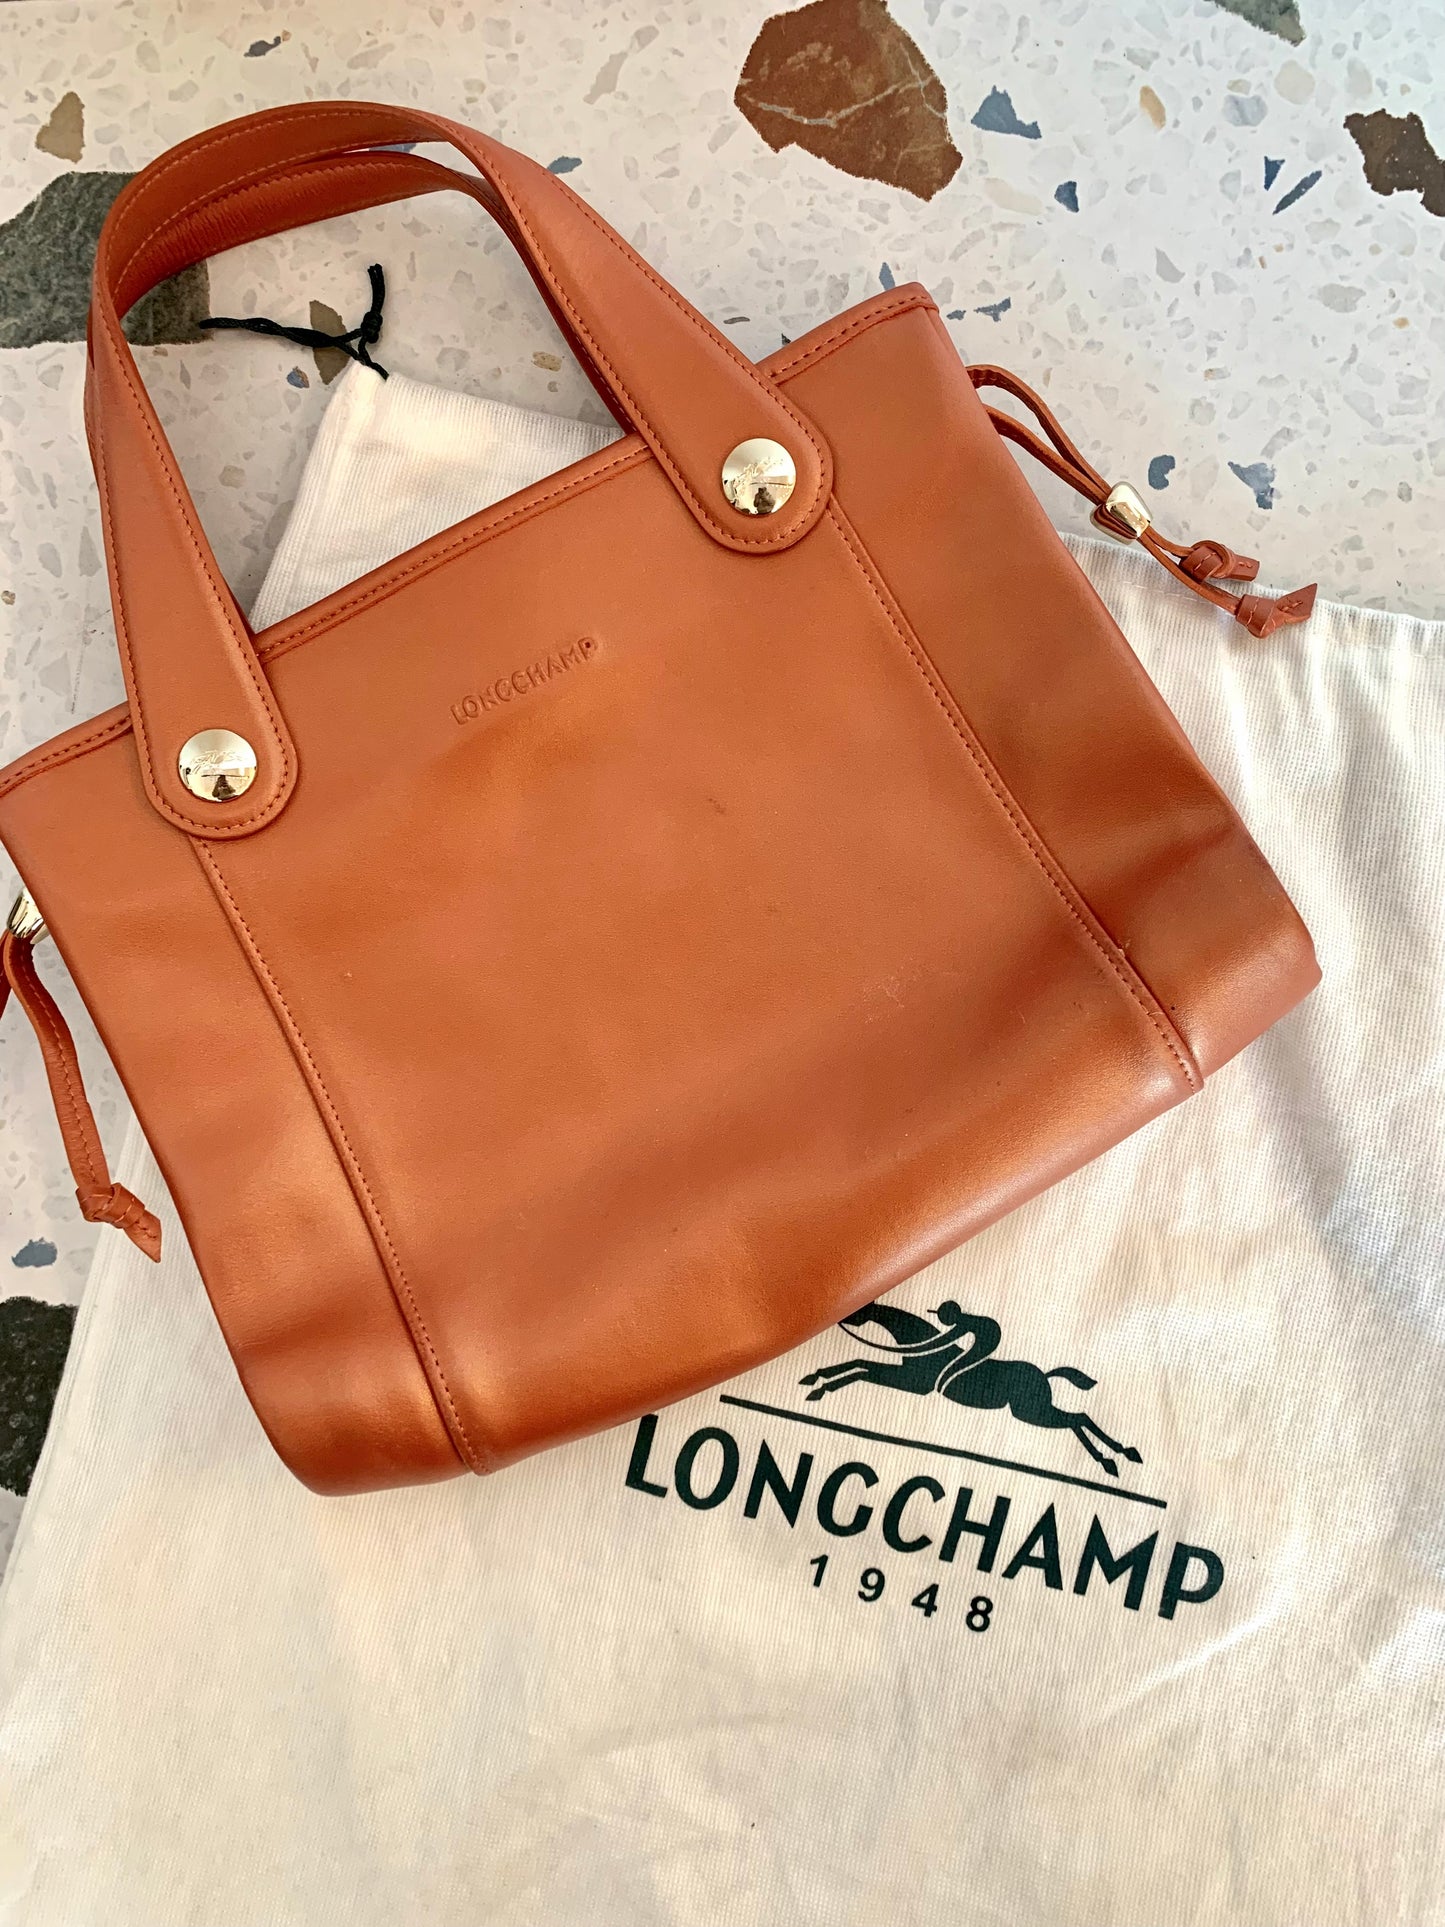 Longchamp burnt orange bag